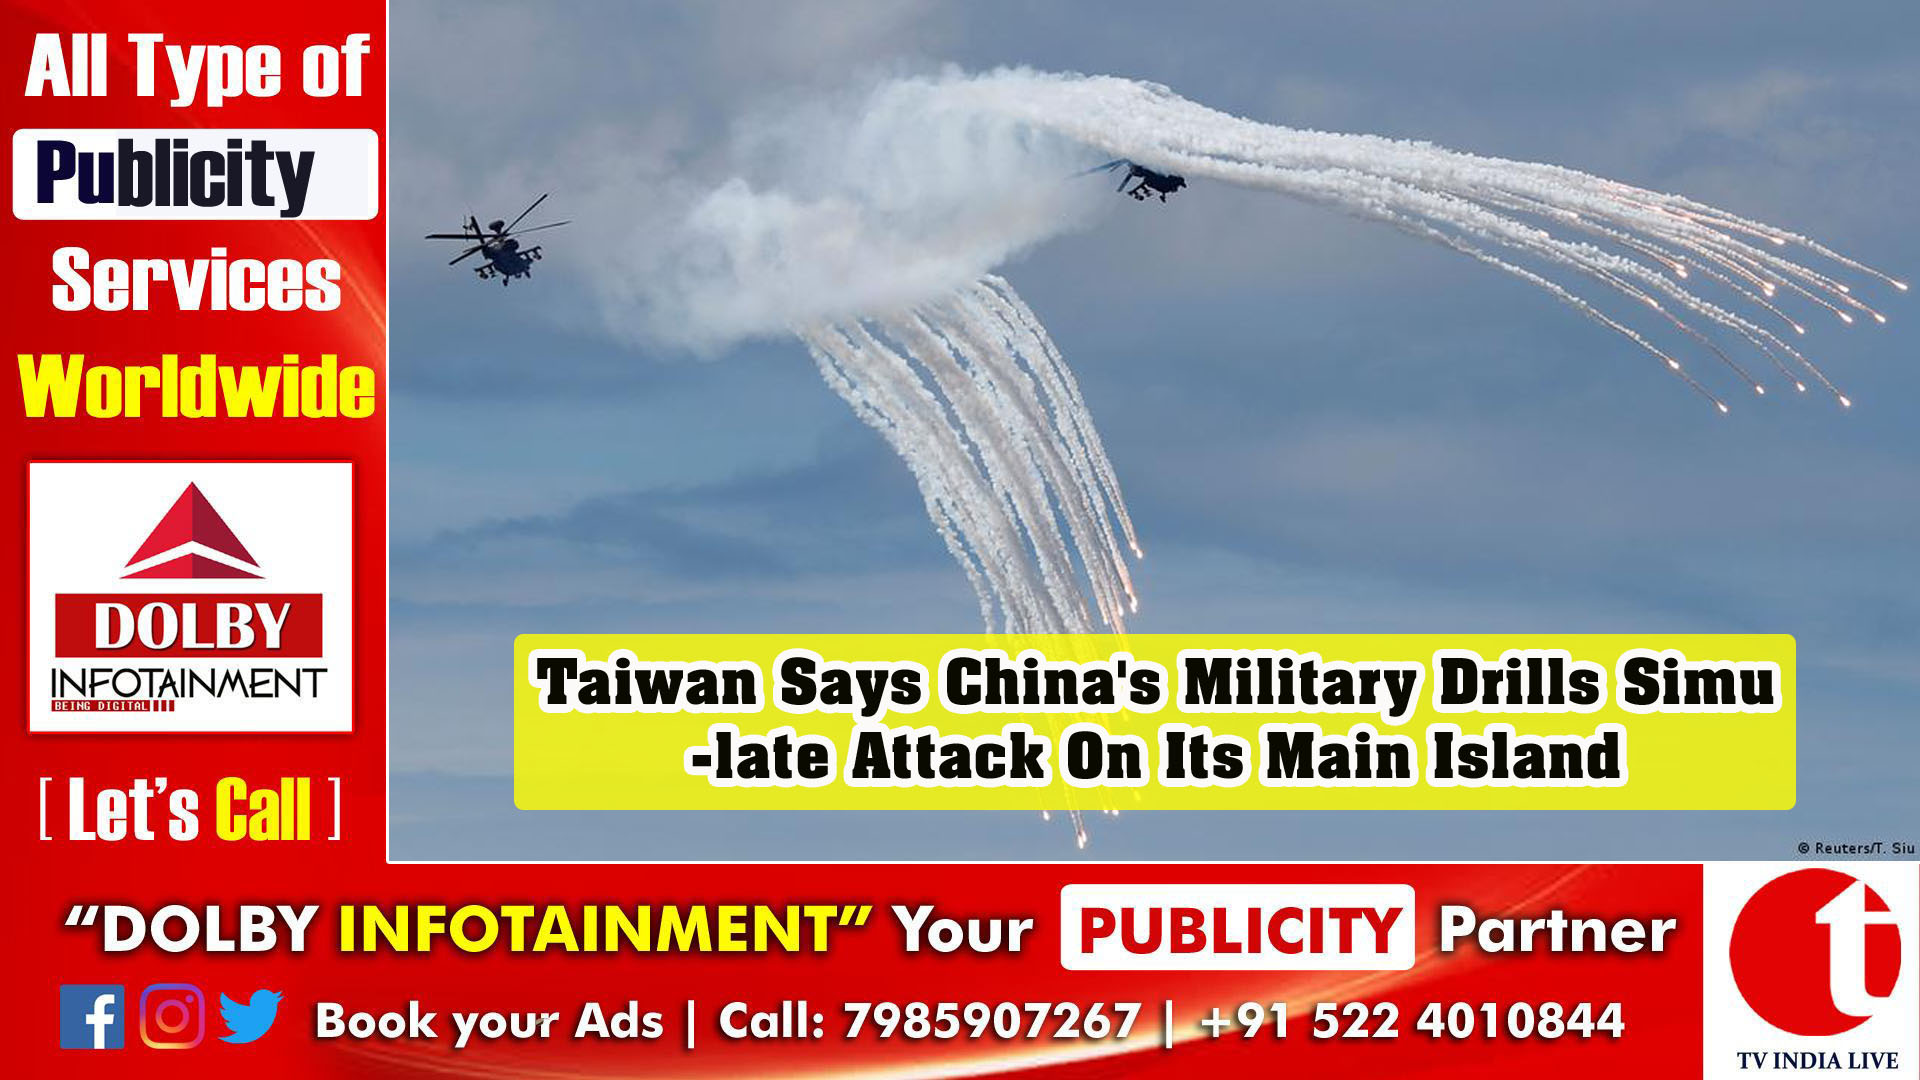 Taiwan Says China's Military Drills Simulate Attack On Its Main Island